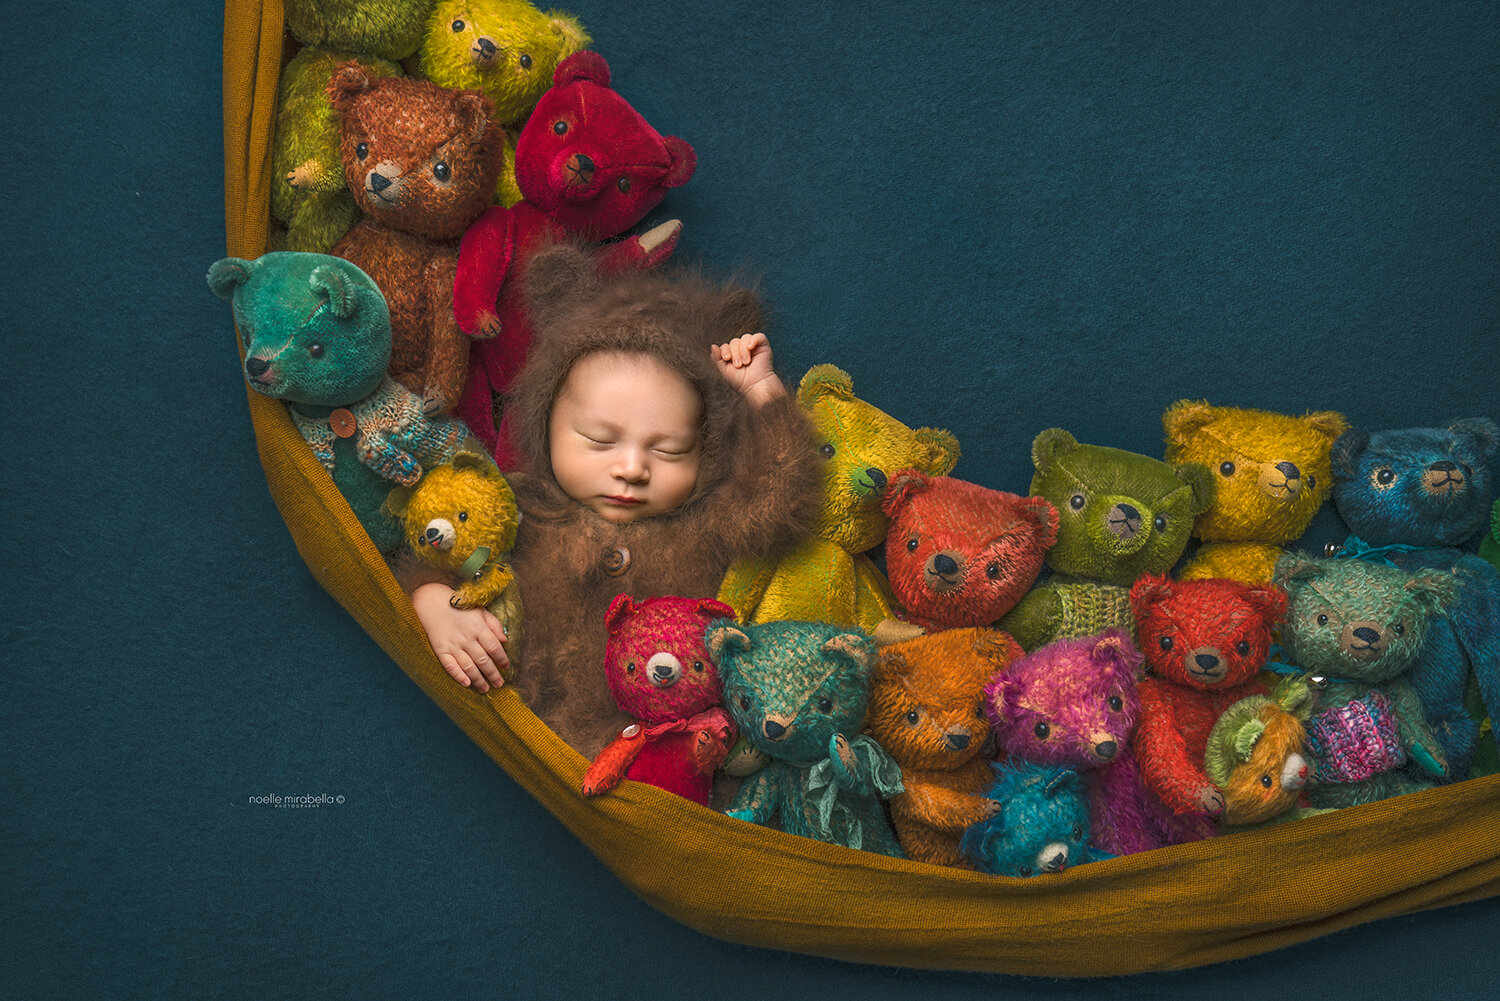 Newborn baby in teddy bear hammock full of multi-colour bears.